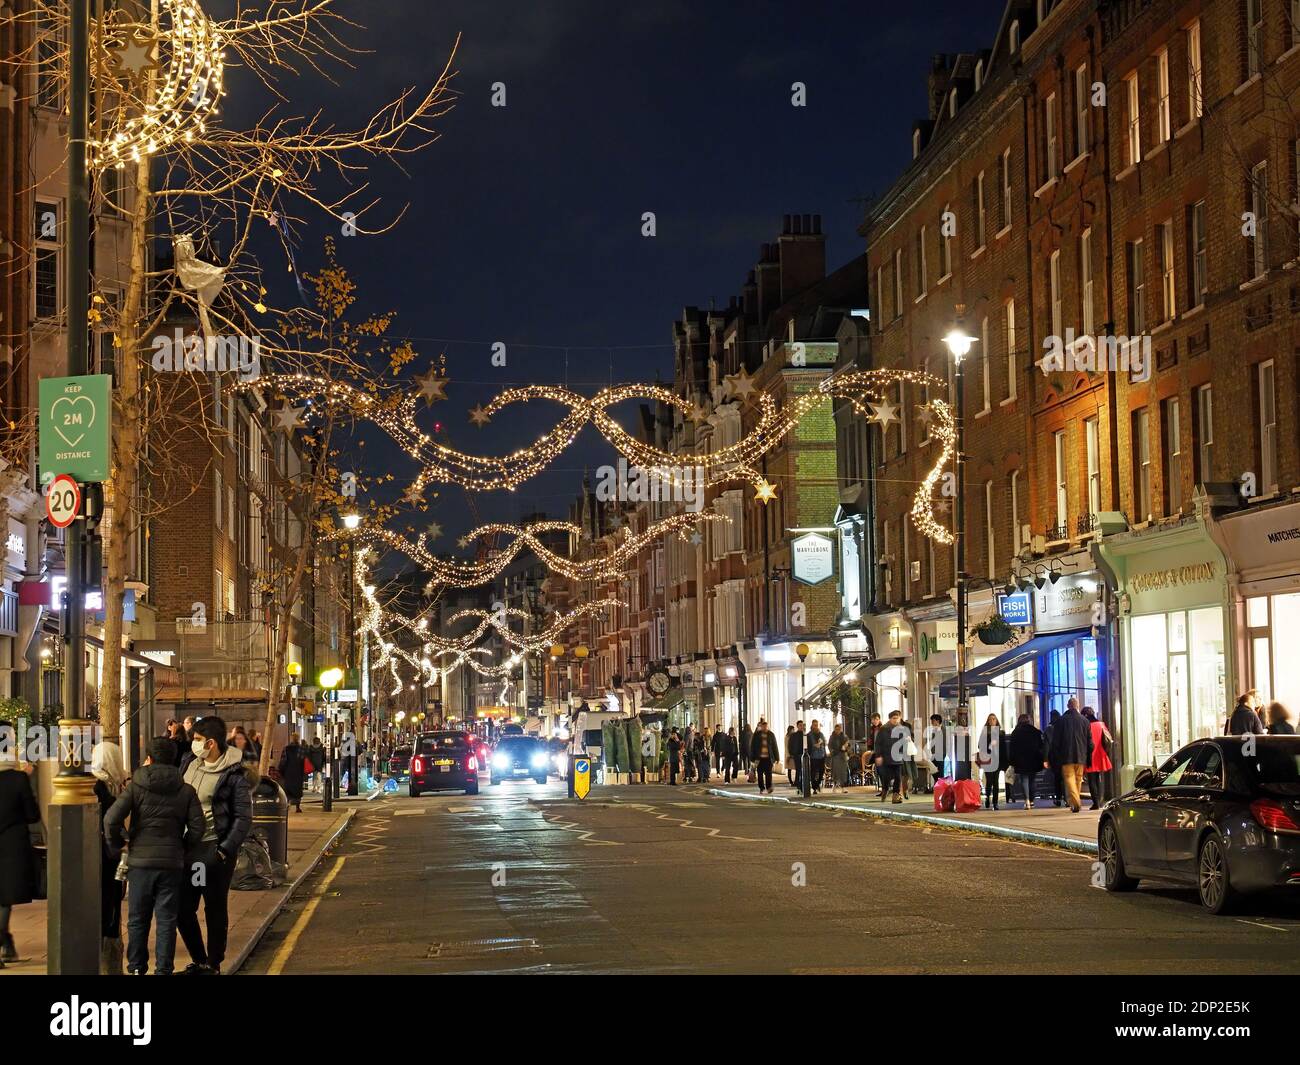 Marylebone High Street London High Resolution Stock Photography and ...